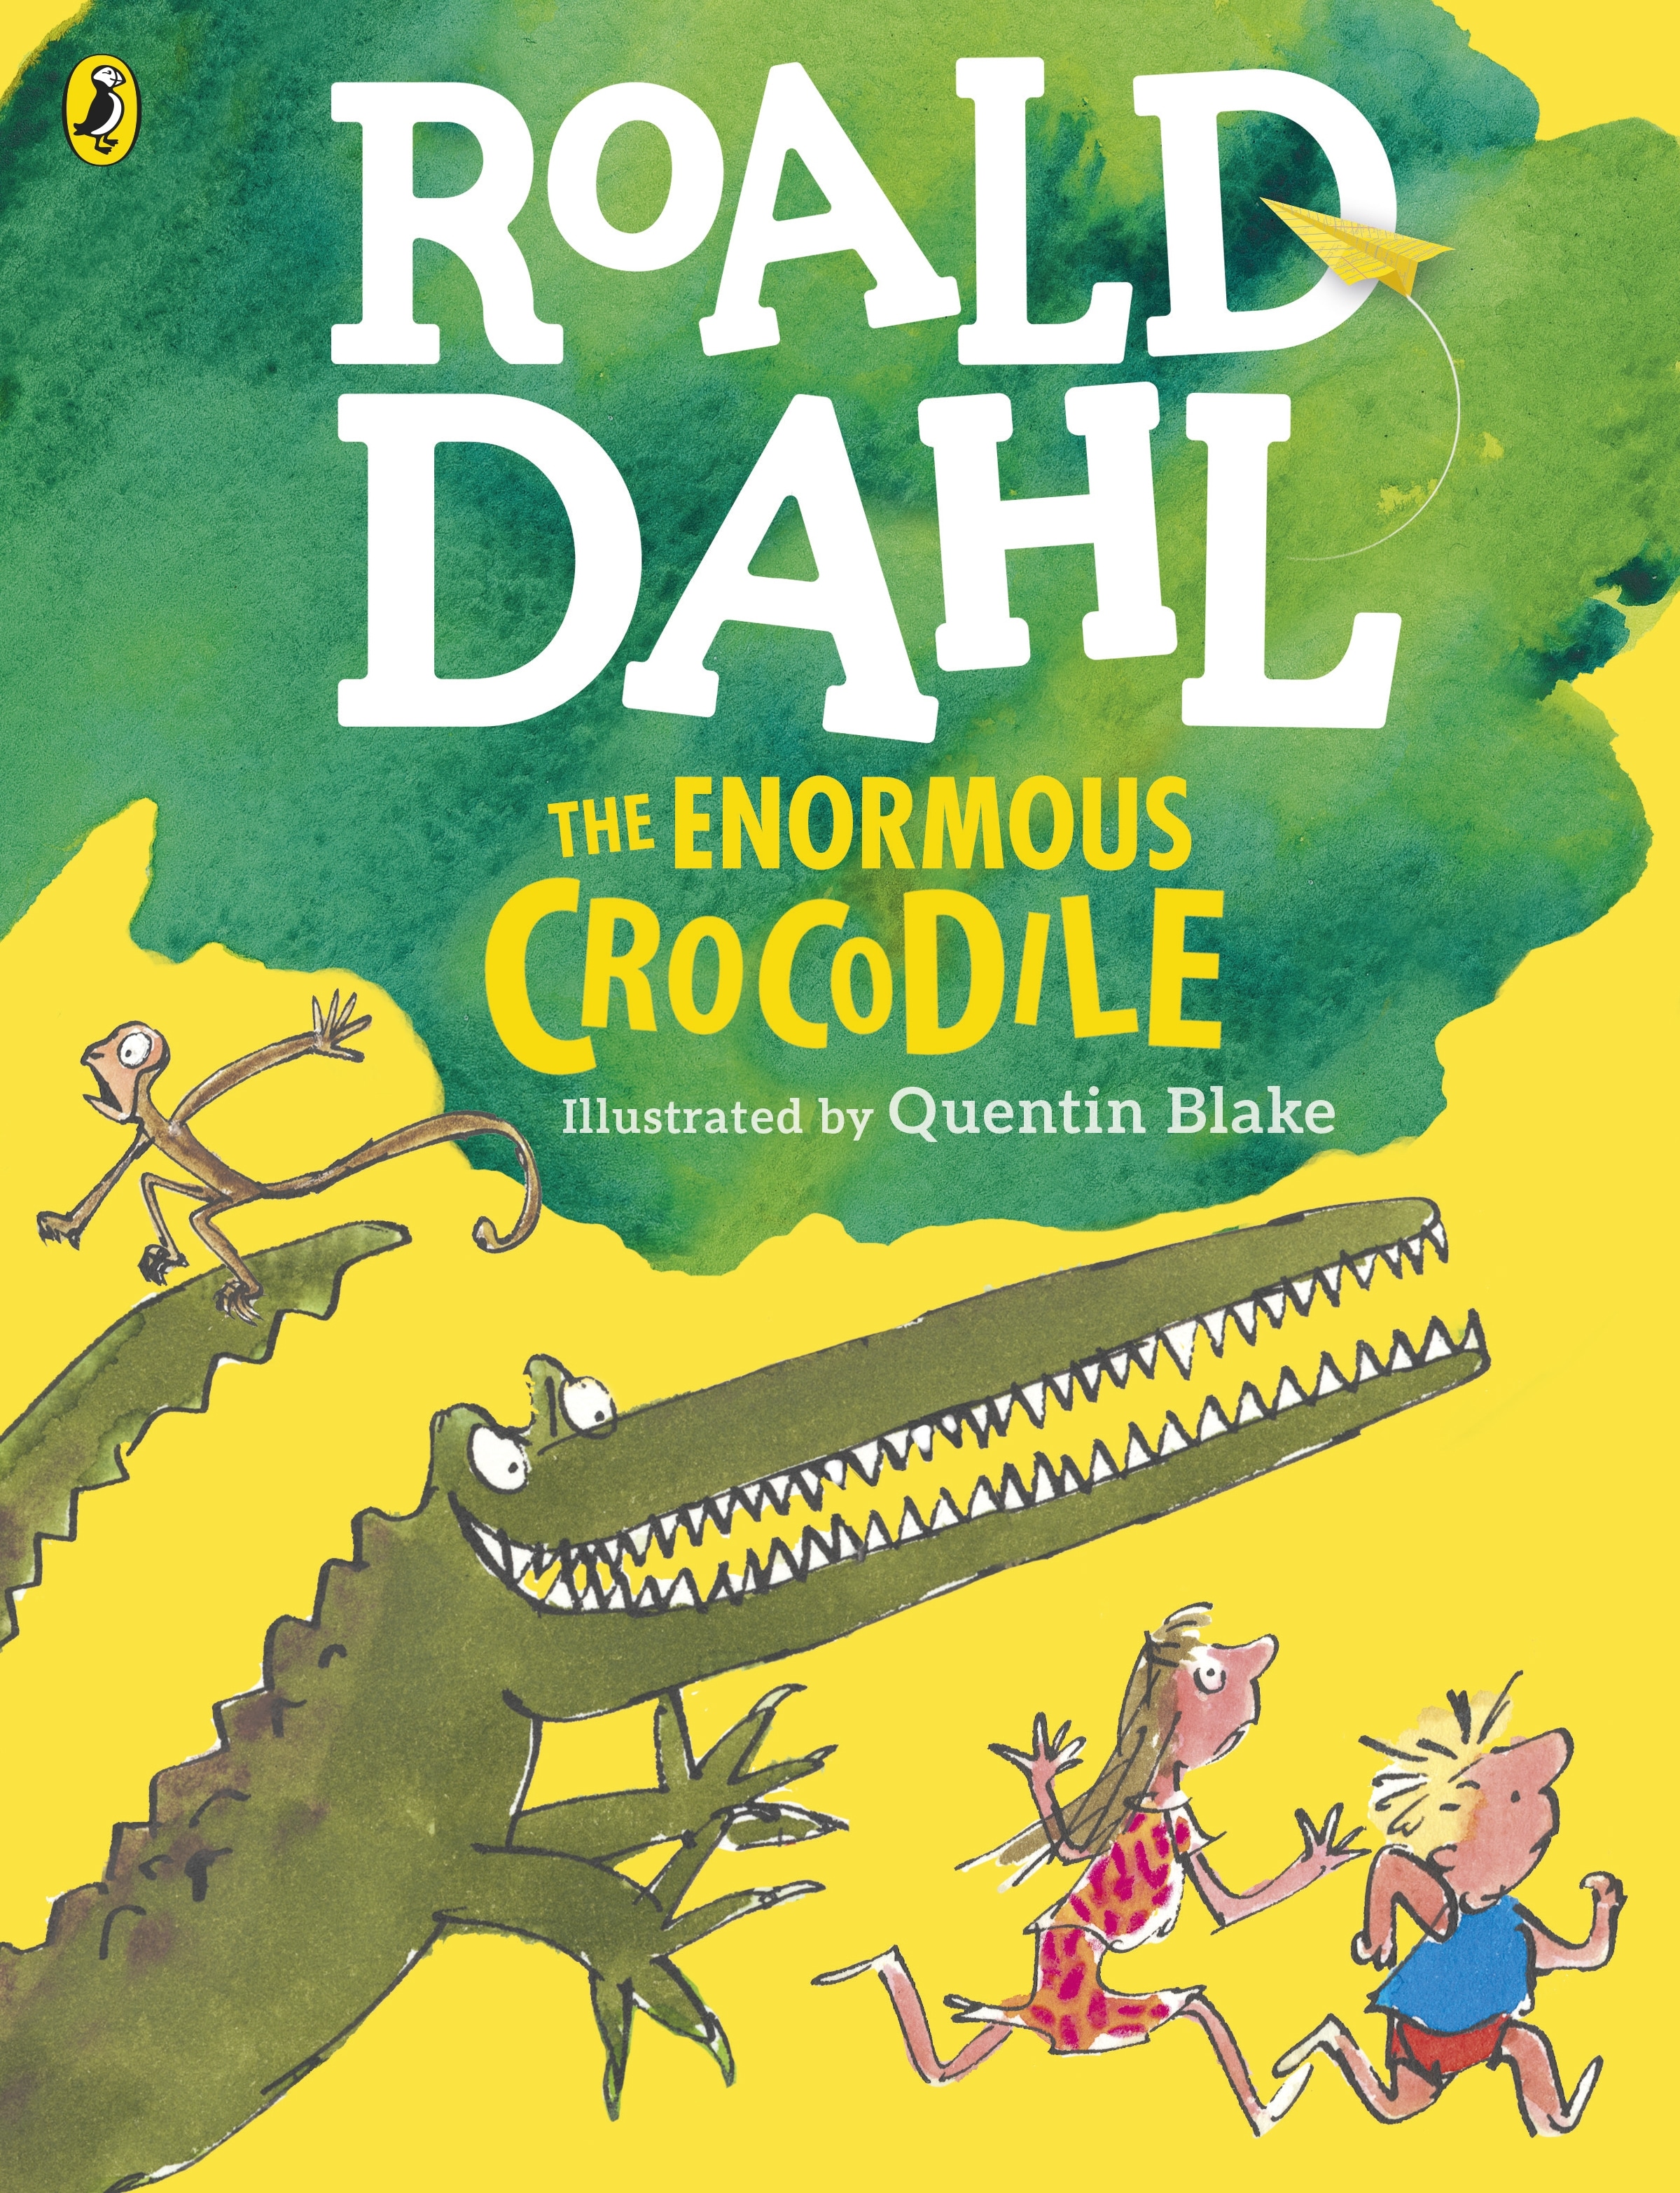 Book “The Enormous Crocodile (Colour Edition)” by Roald Dahl — June 2, 2016